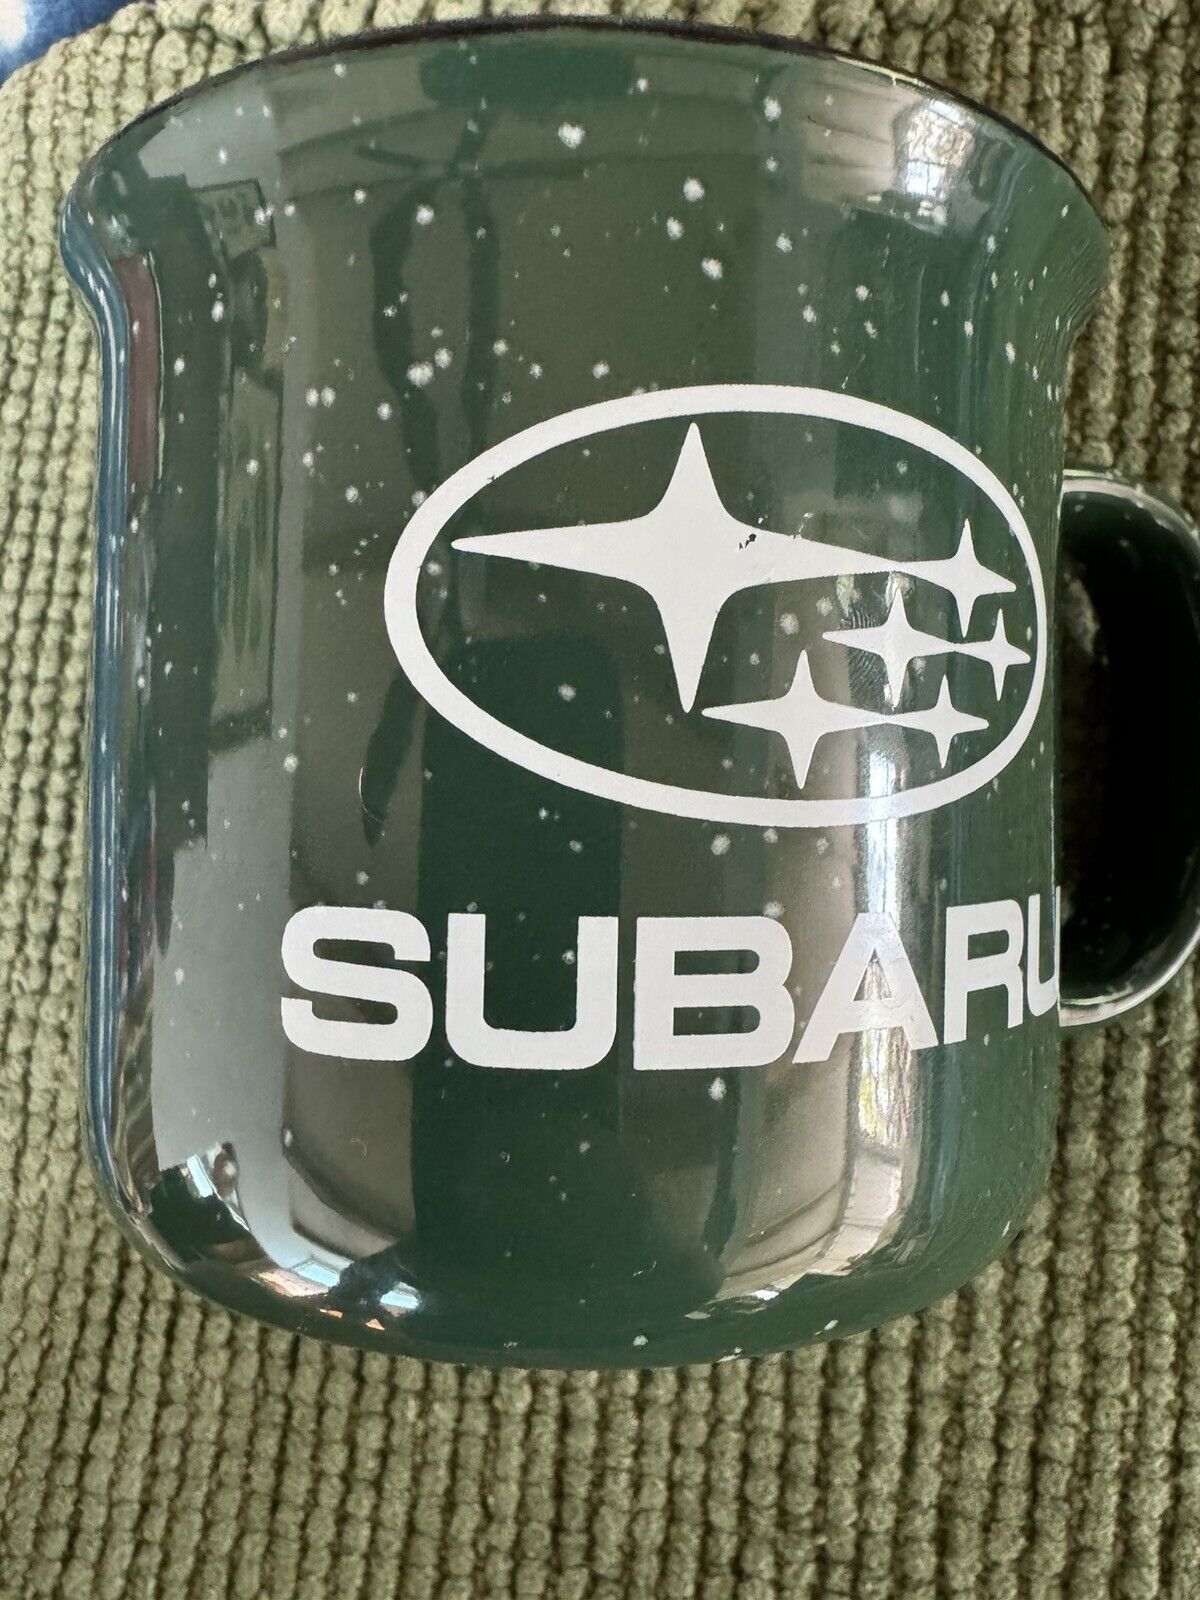 Subaru 15 Oz Coffee Mug Green Cup With Logo Ceramic Camping Camp Fire Speckled